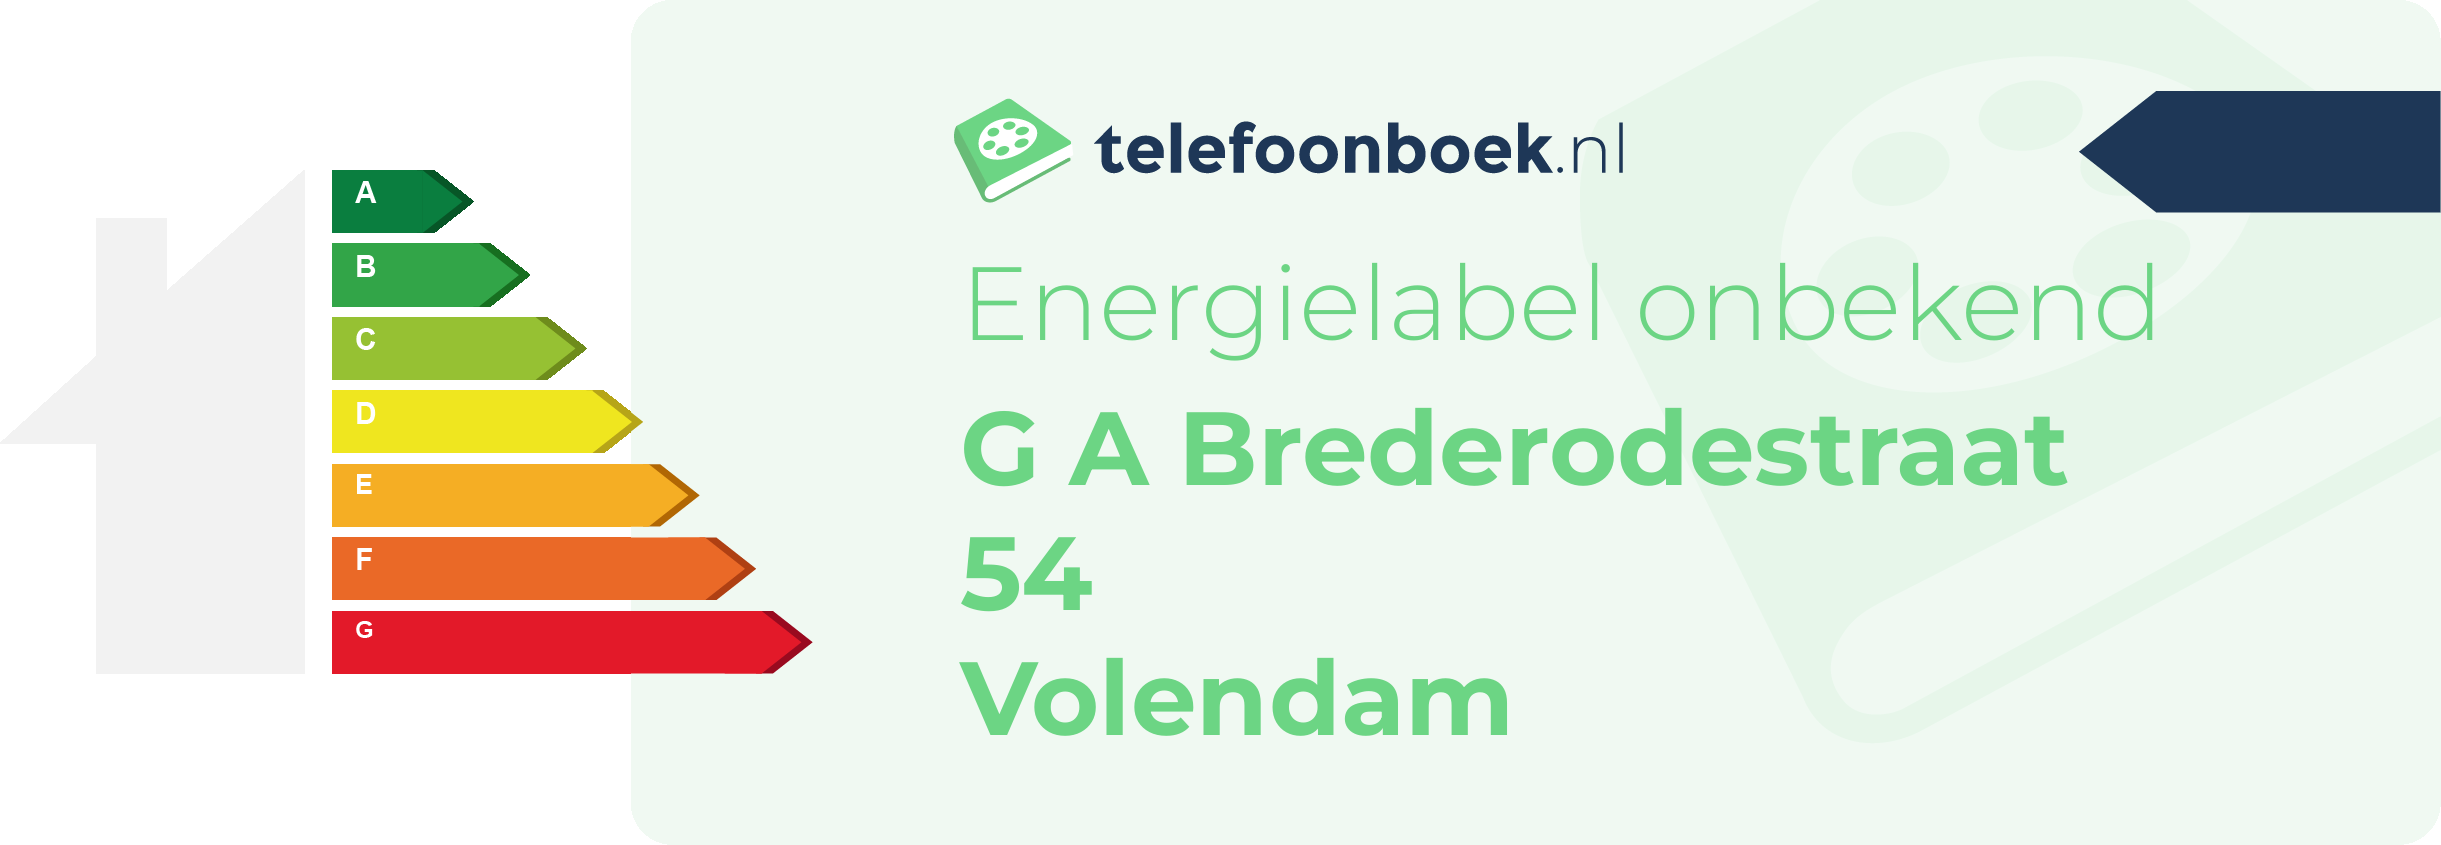 Energielabel G A Brederodestraat 54 Volendam